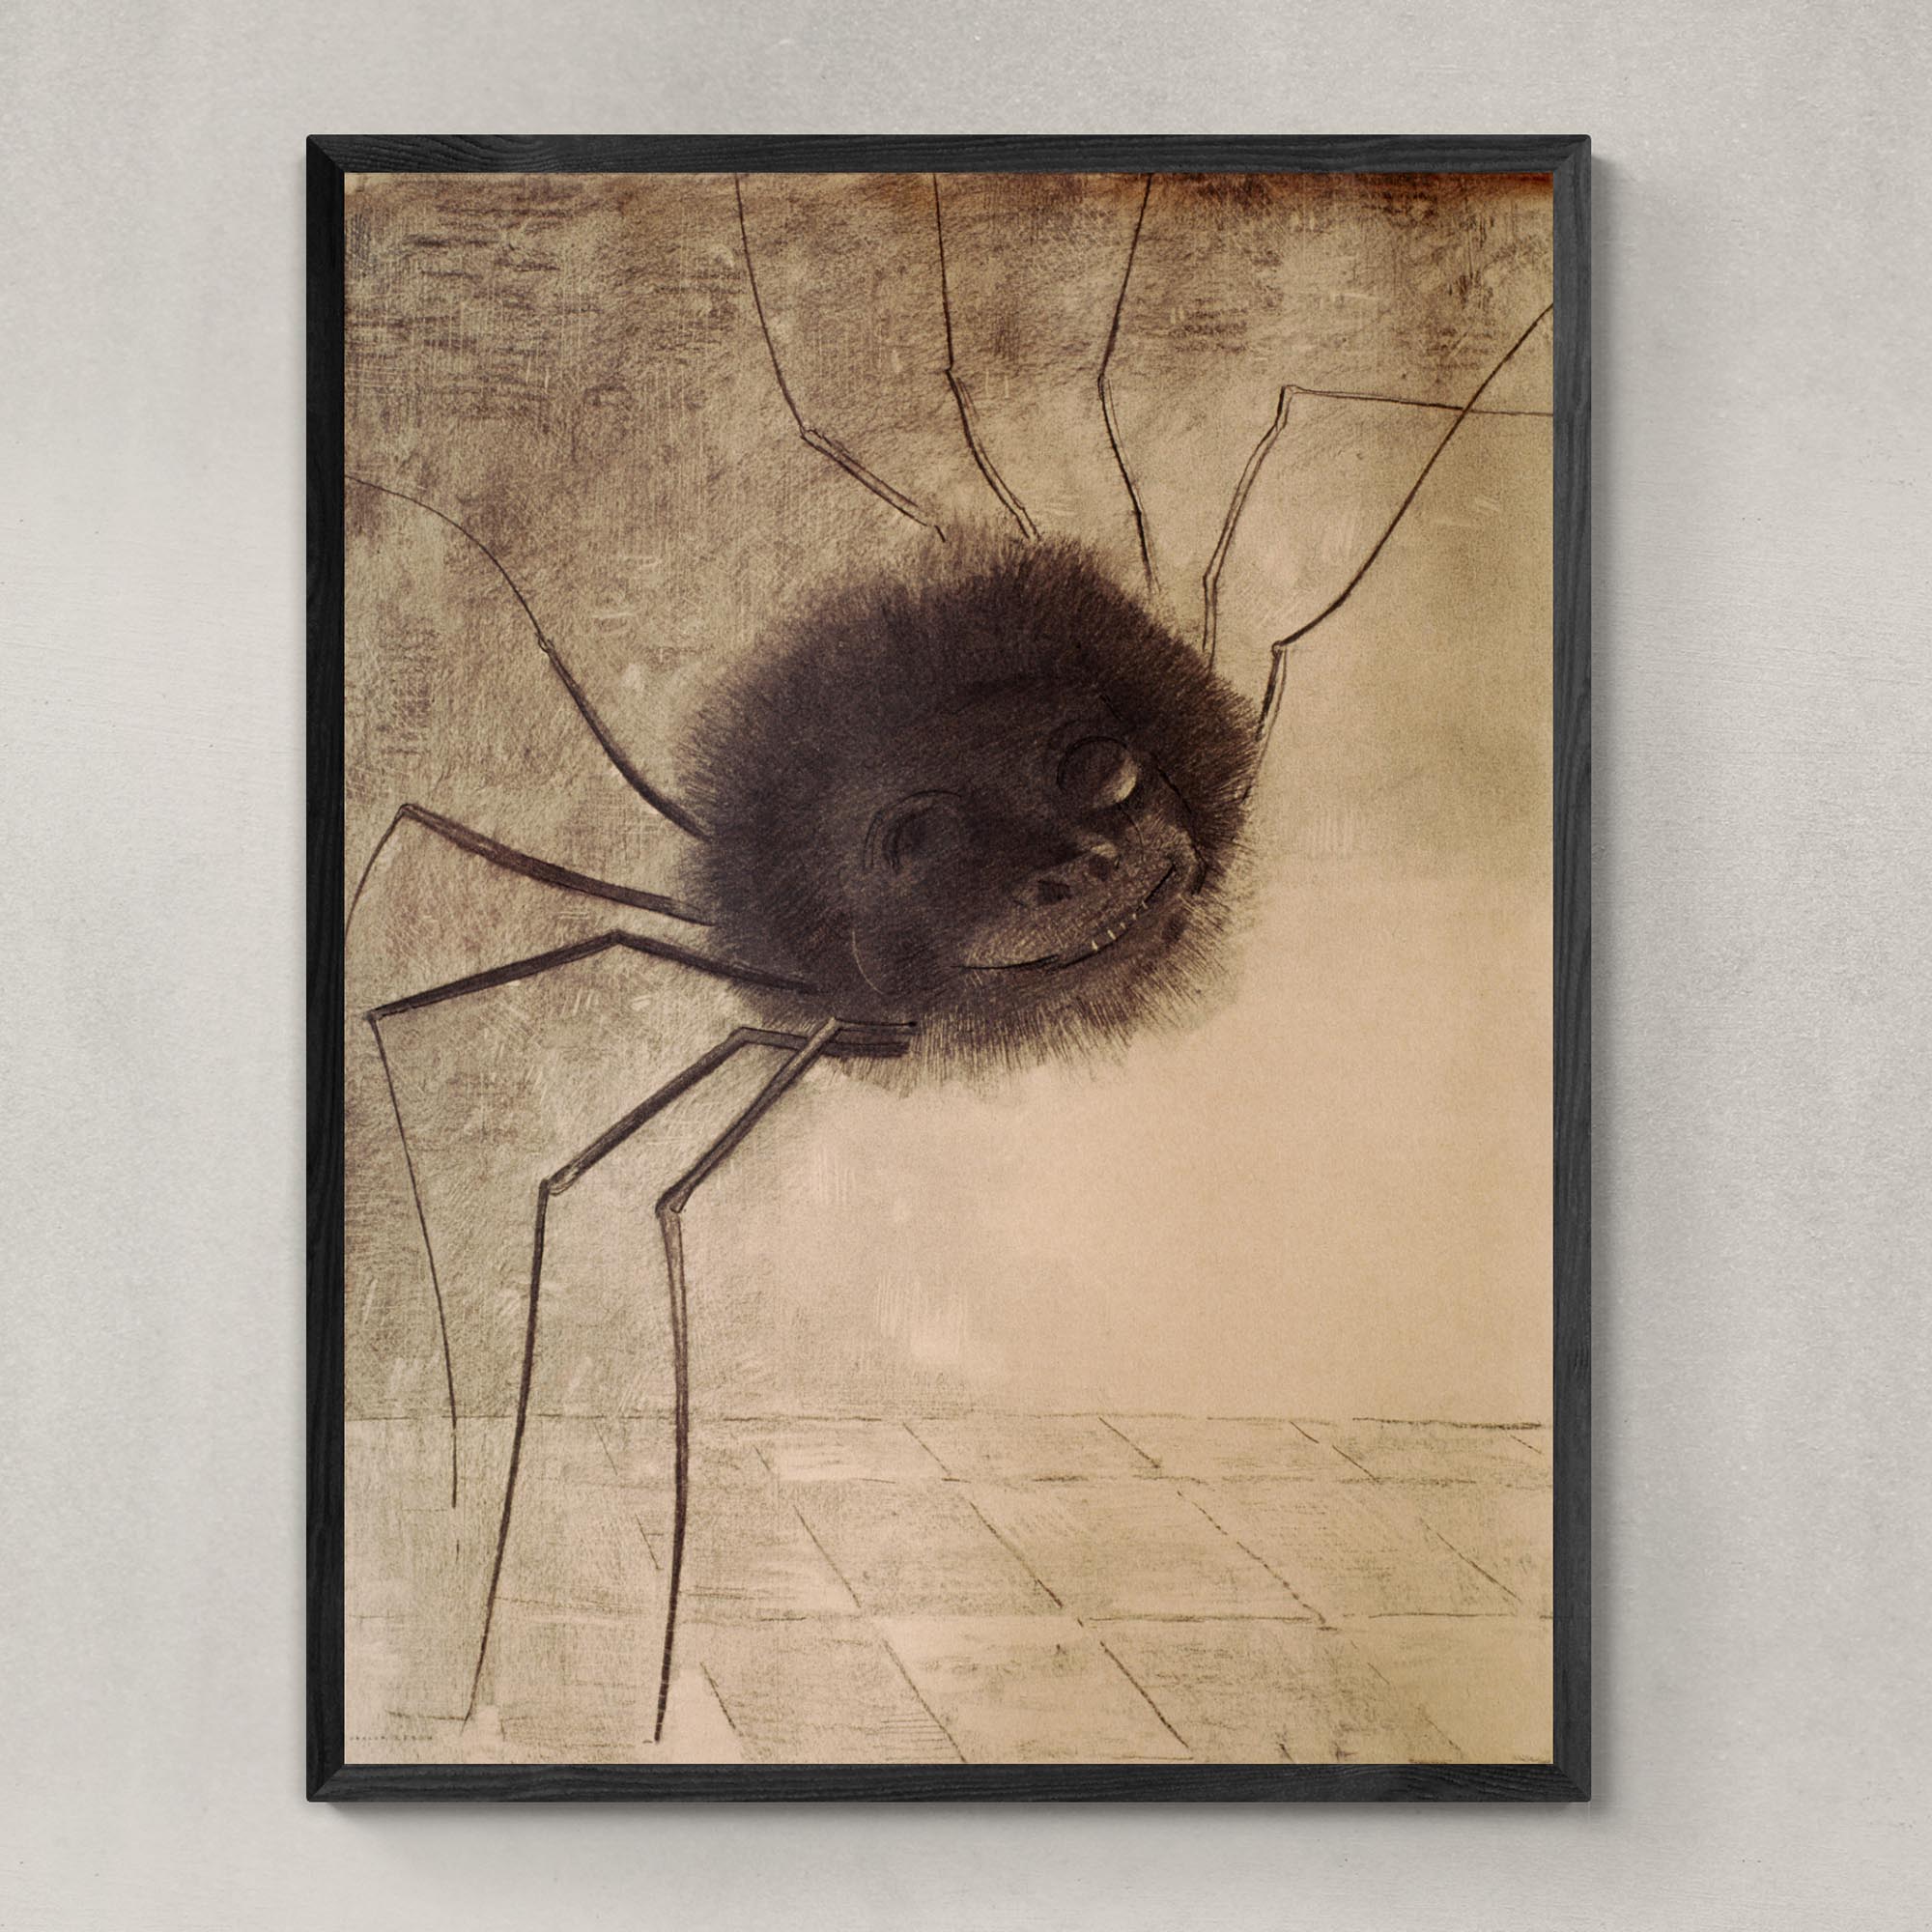 Fine art 6"x8" Odilon Redon: The Smiling Spider Symbolist | Dark Art Fantasy Surreal Vintage Fine Art Print